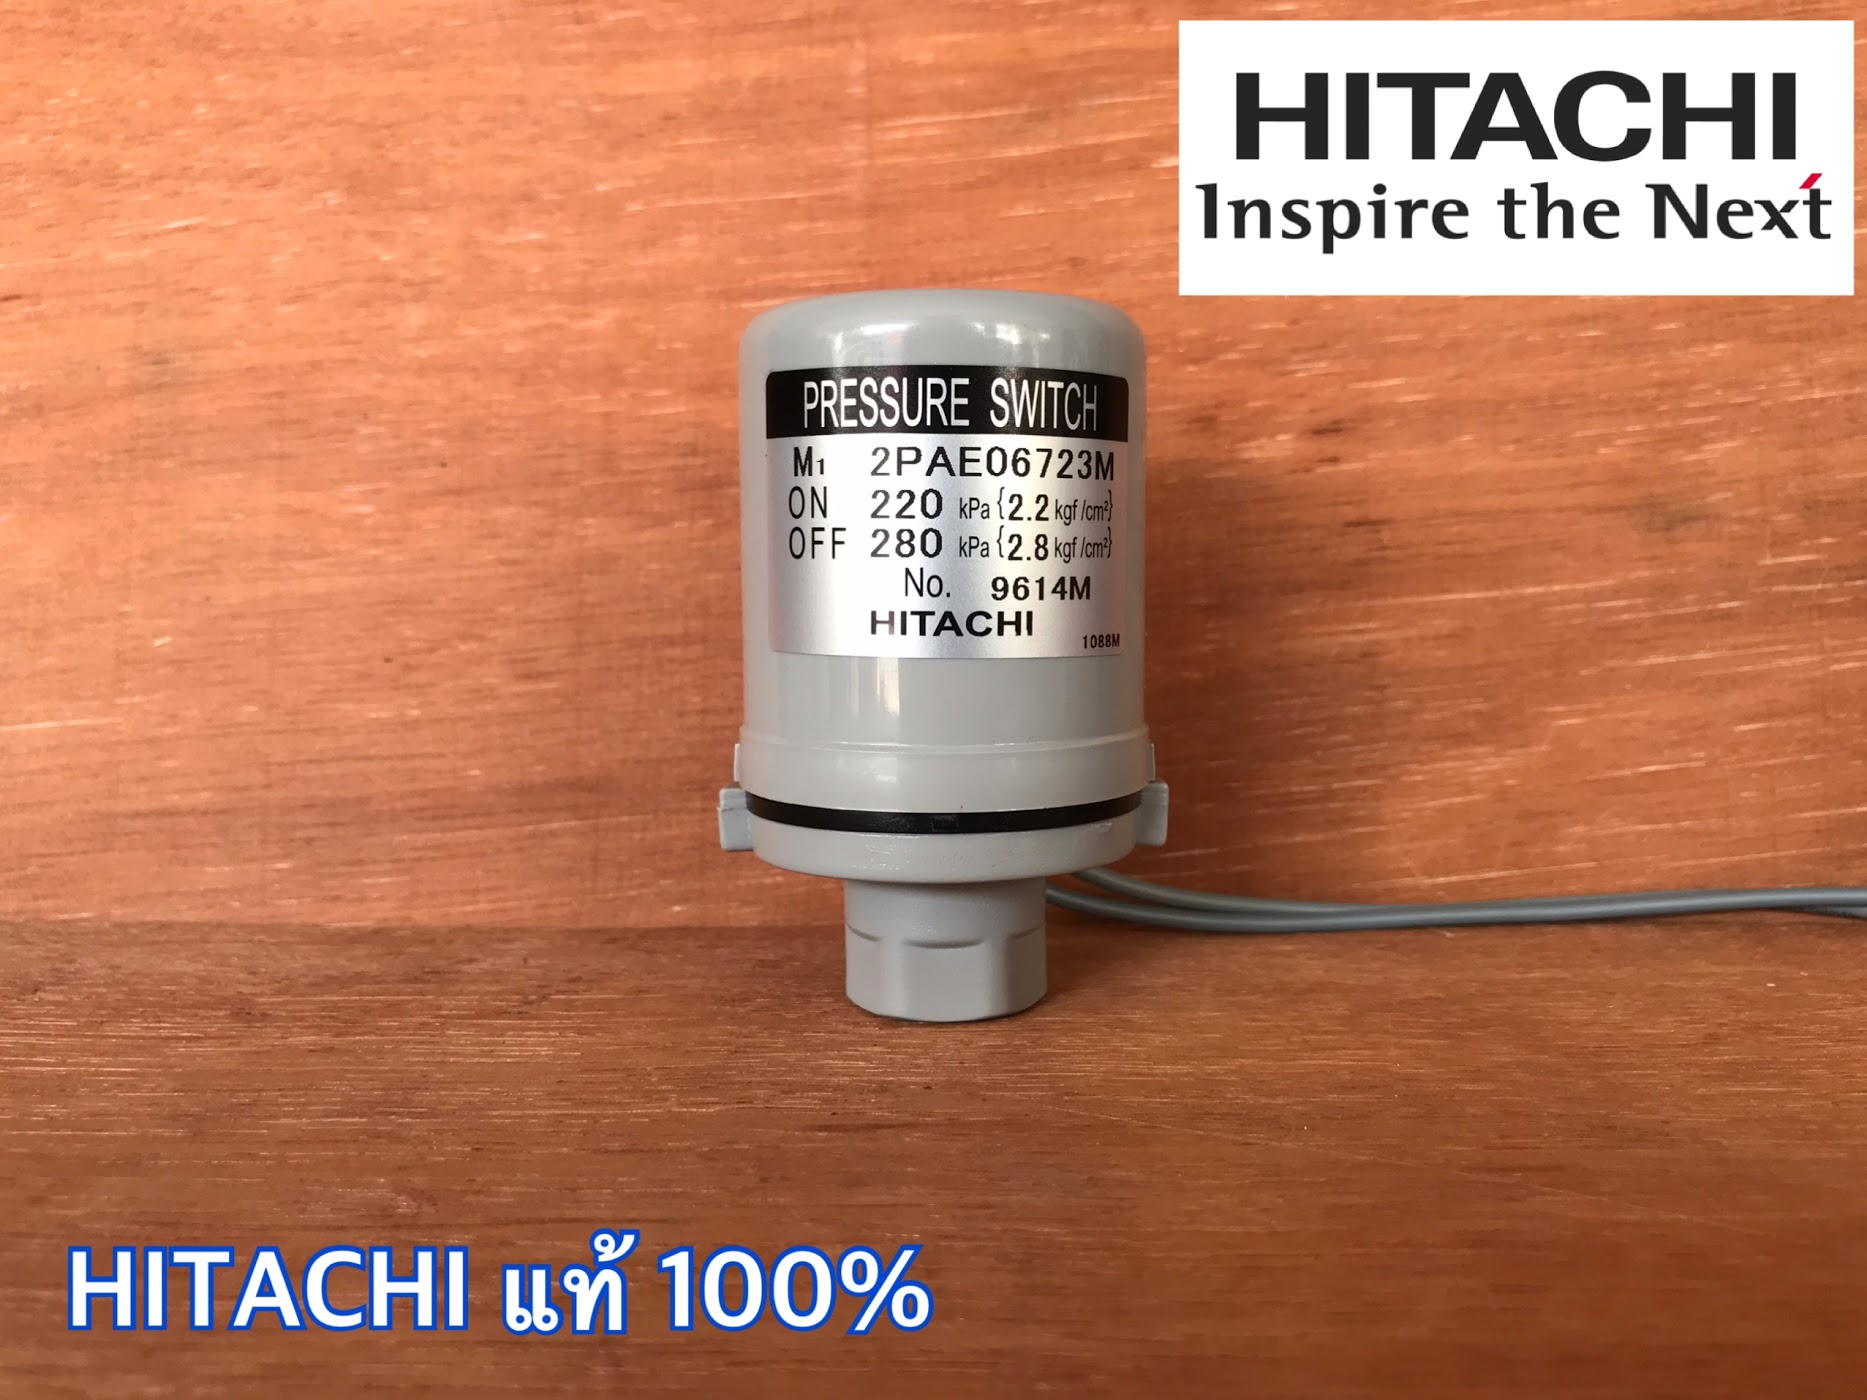 Pressure Switch Hitachi สวิทช์แรงดัน ปั๊มน้ำ ฮิตาชิ Mitsubishi ออโต้สวิทช์ อะไหล่ปั๊มน้ำ ของแท้จาก HITACHI สวิทช์ออโต้ สวิทช์ปั๊มน้ำ สวิทช์ควบคุมแรงดัน